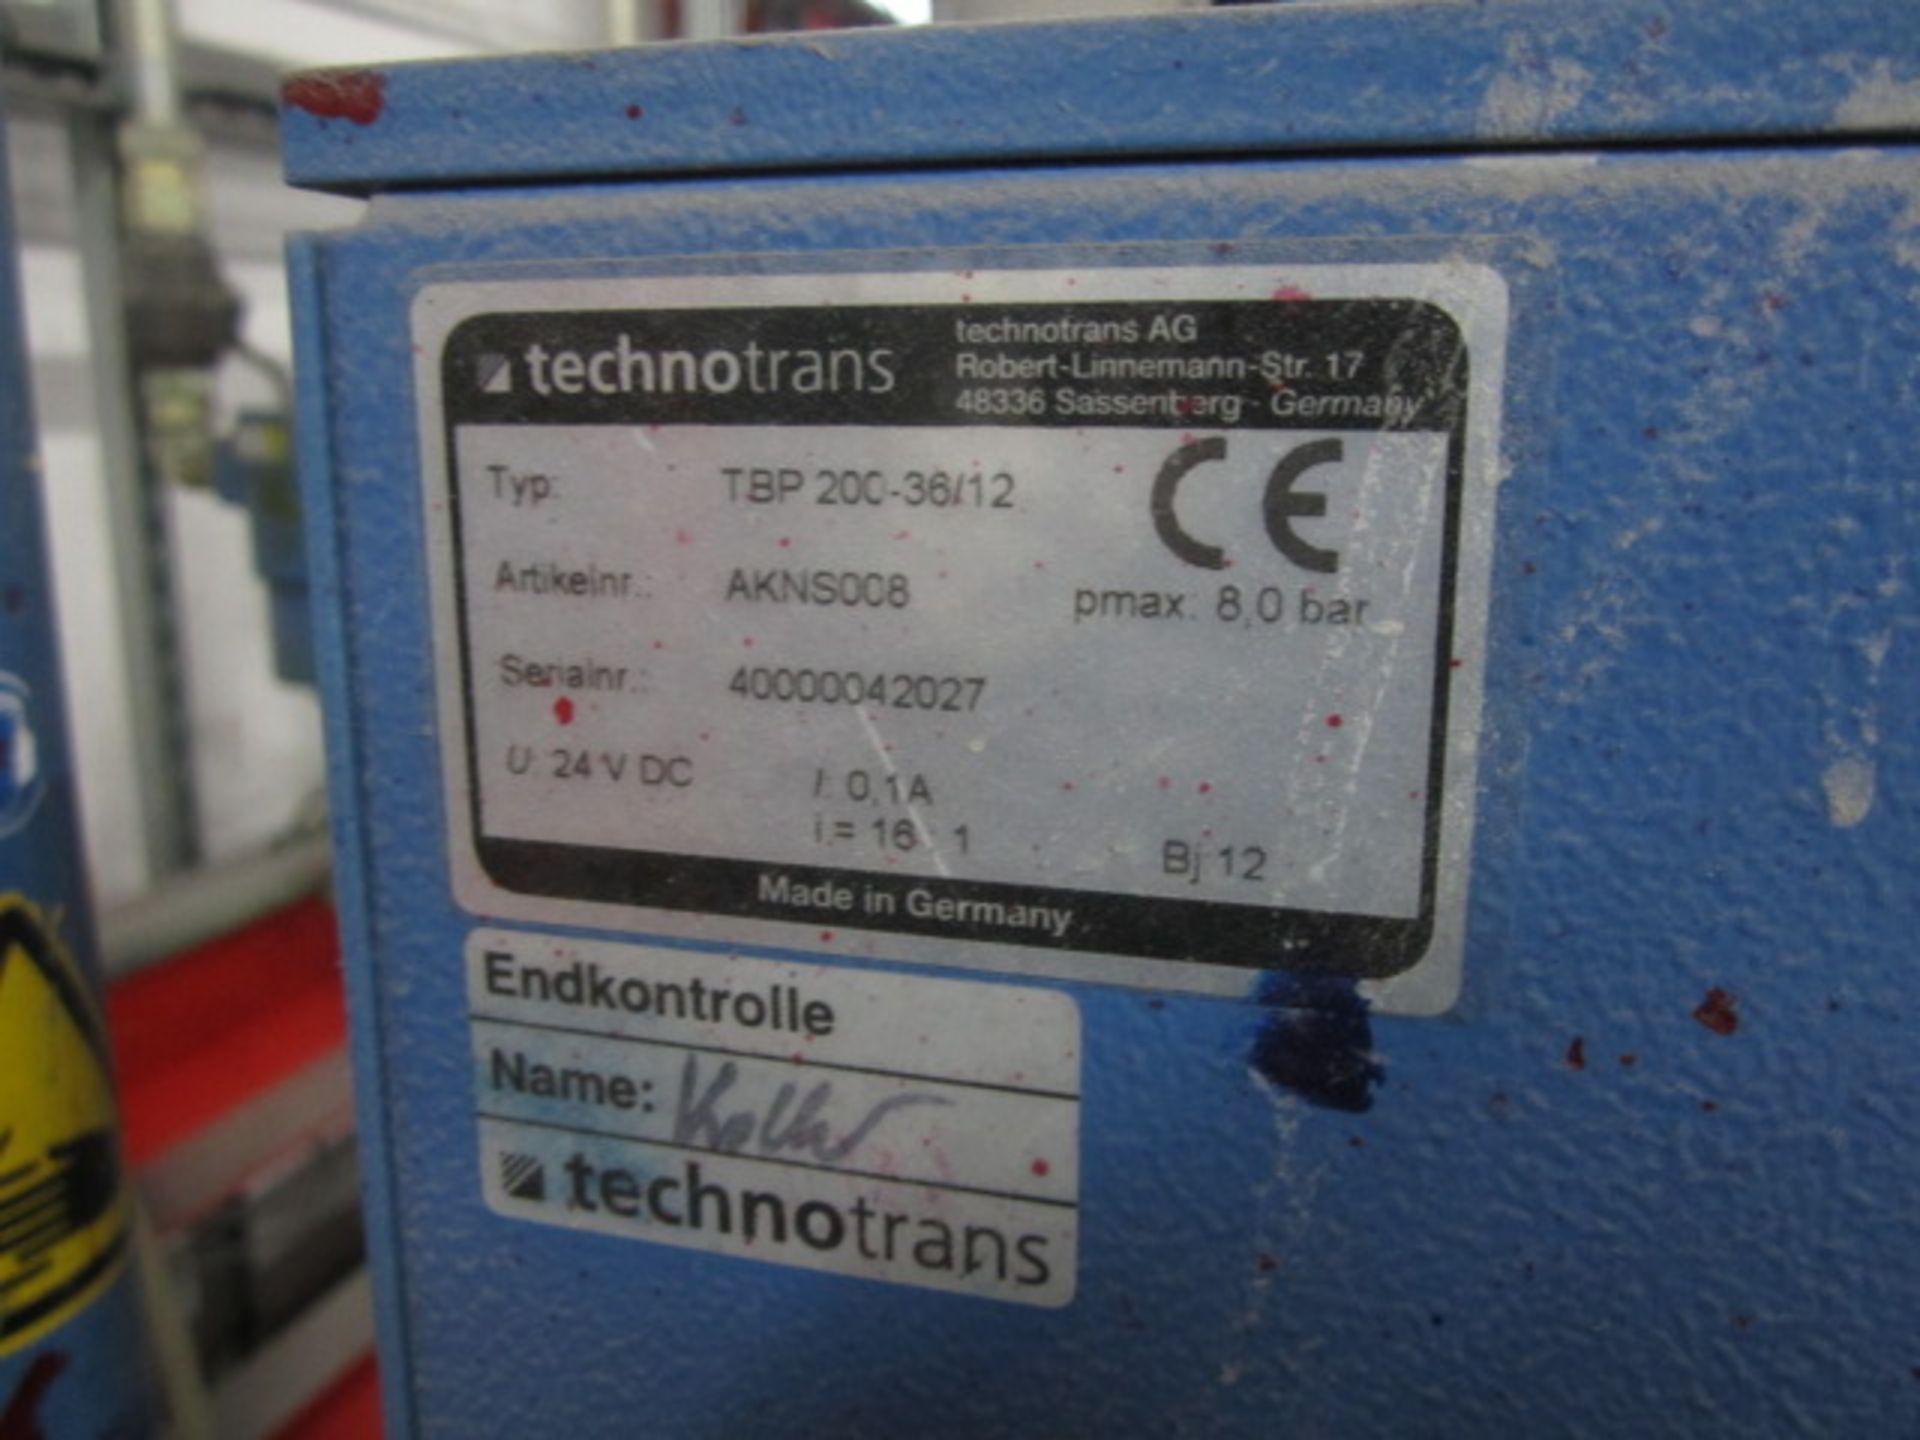 Technotrans TBP200-36/12 ink pump (2012), serial no. 40000042027 - Image 3 of 3